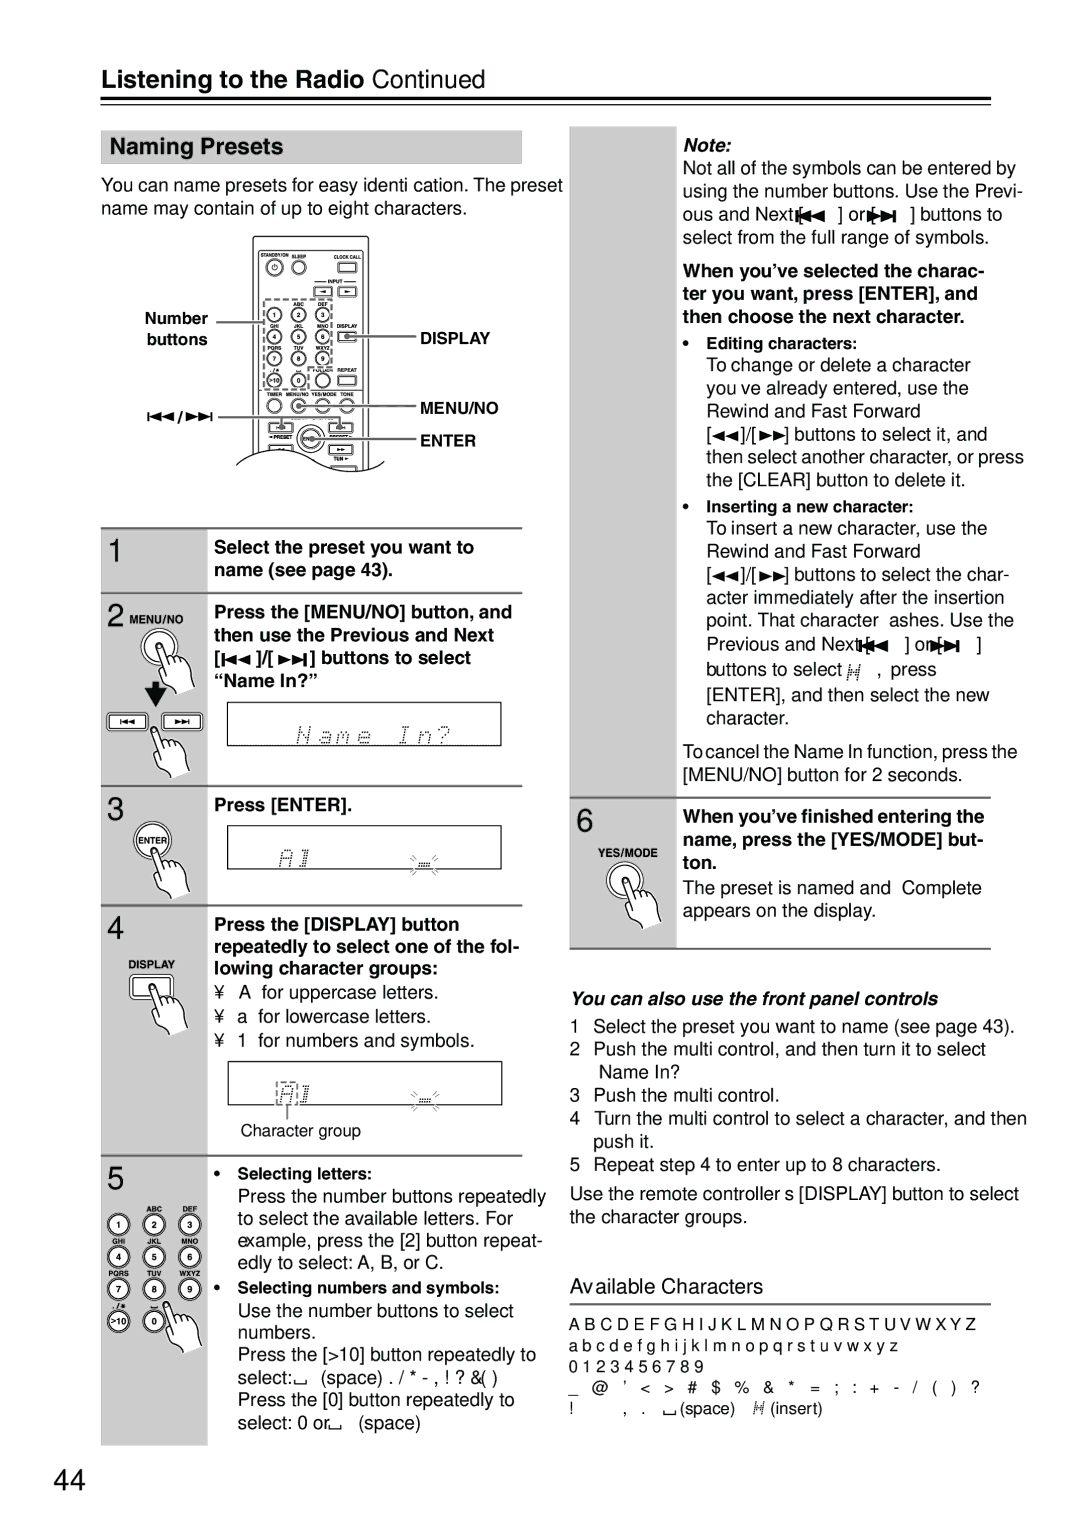 Onkyo CR-715DAB instruction manual Naming Presets, Available Characters 